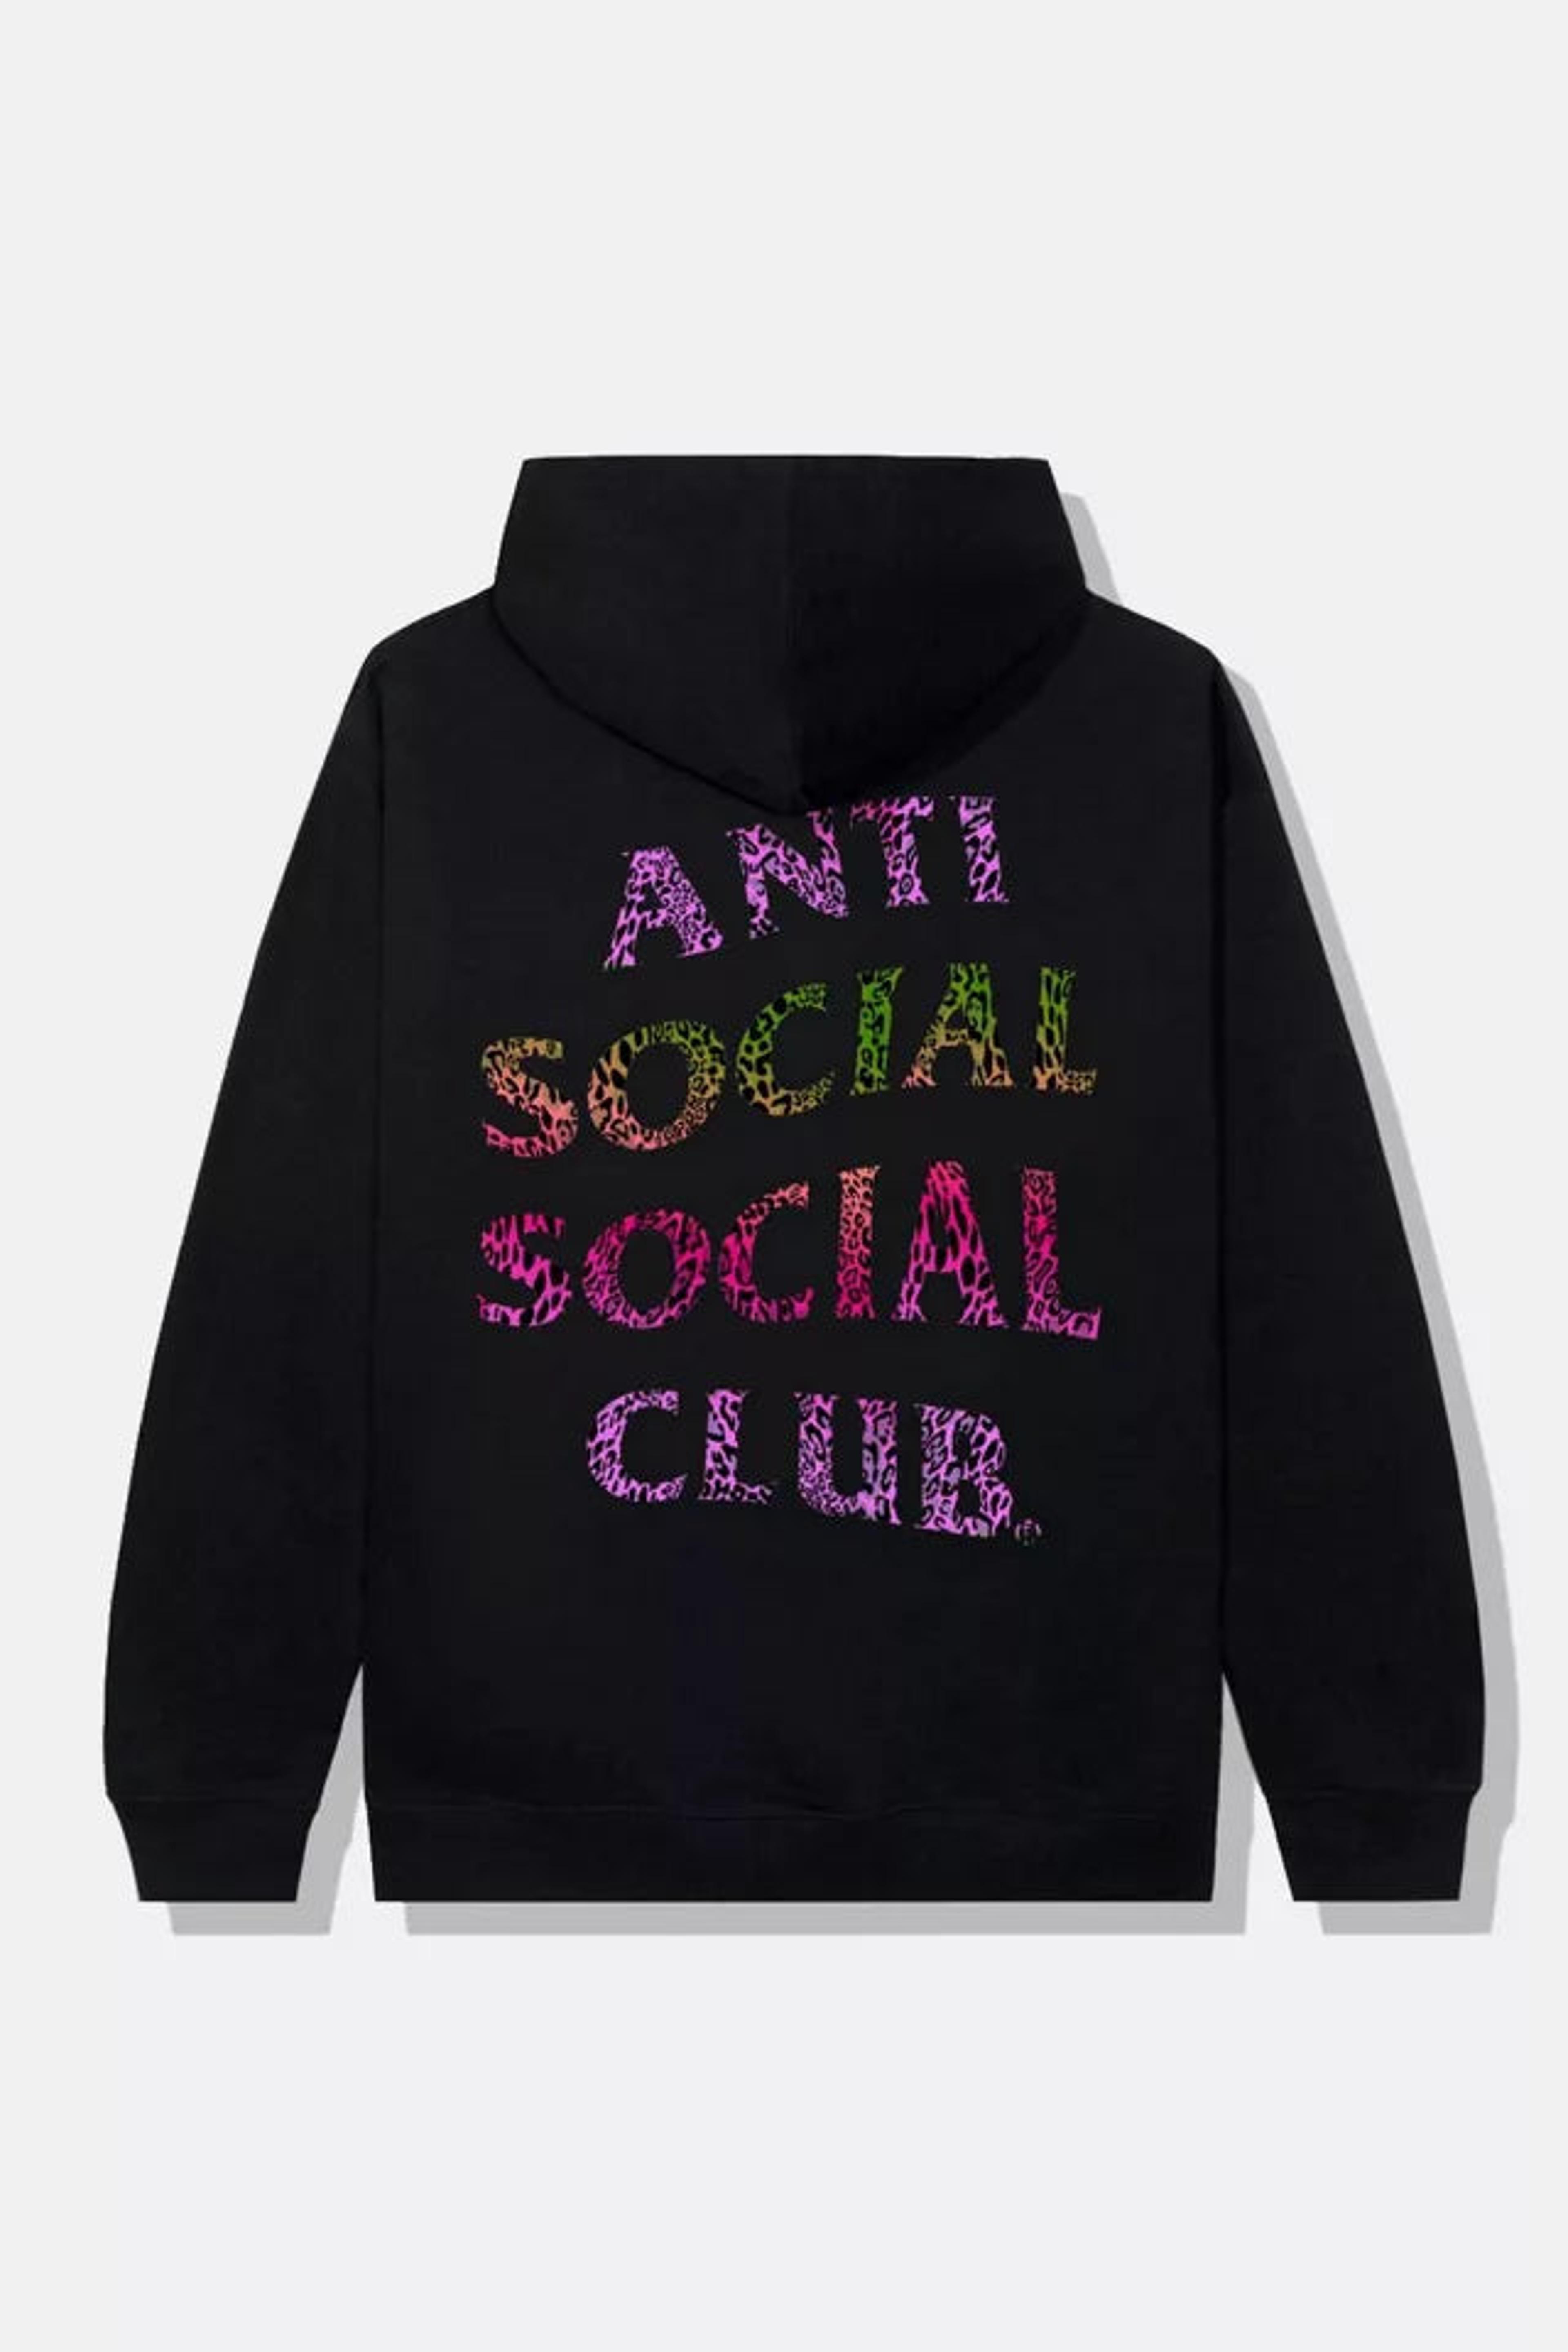 Anti Social Social Club Assclubtronic Black Hoodie ASSC DS Brand